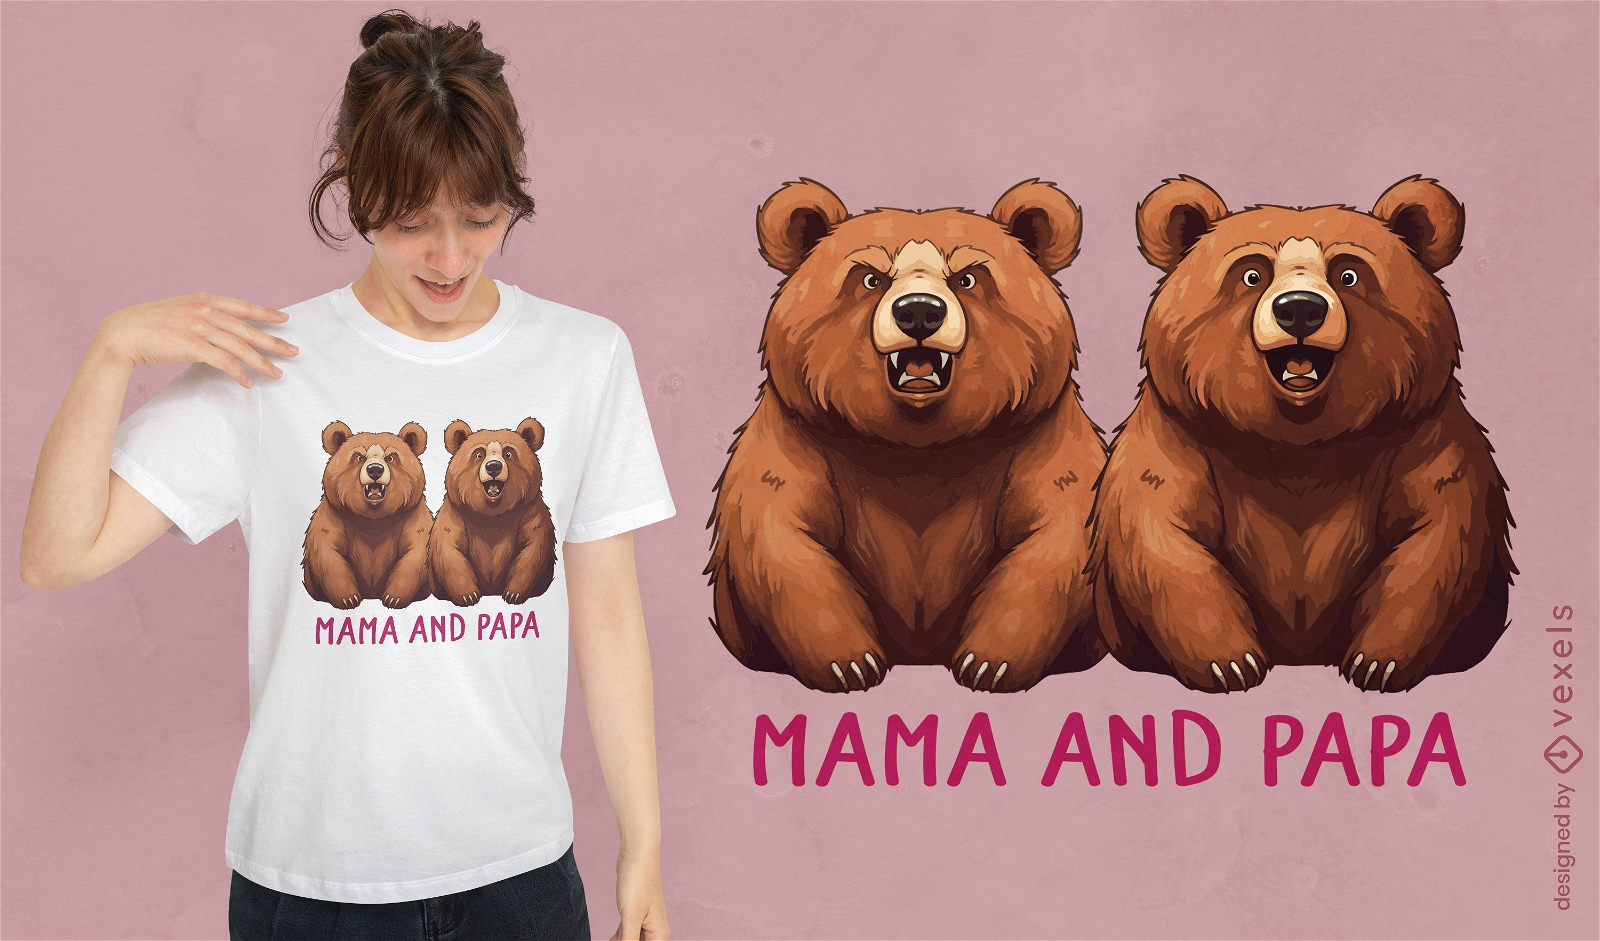 Mama and papa bear t-shirt design